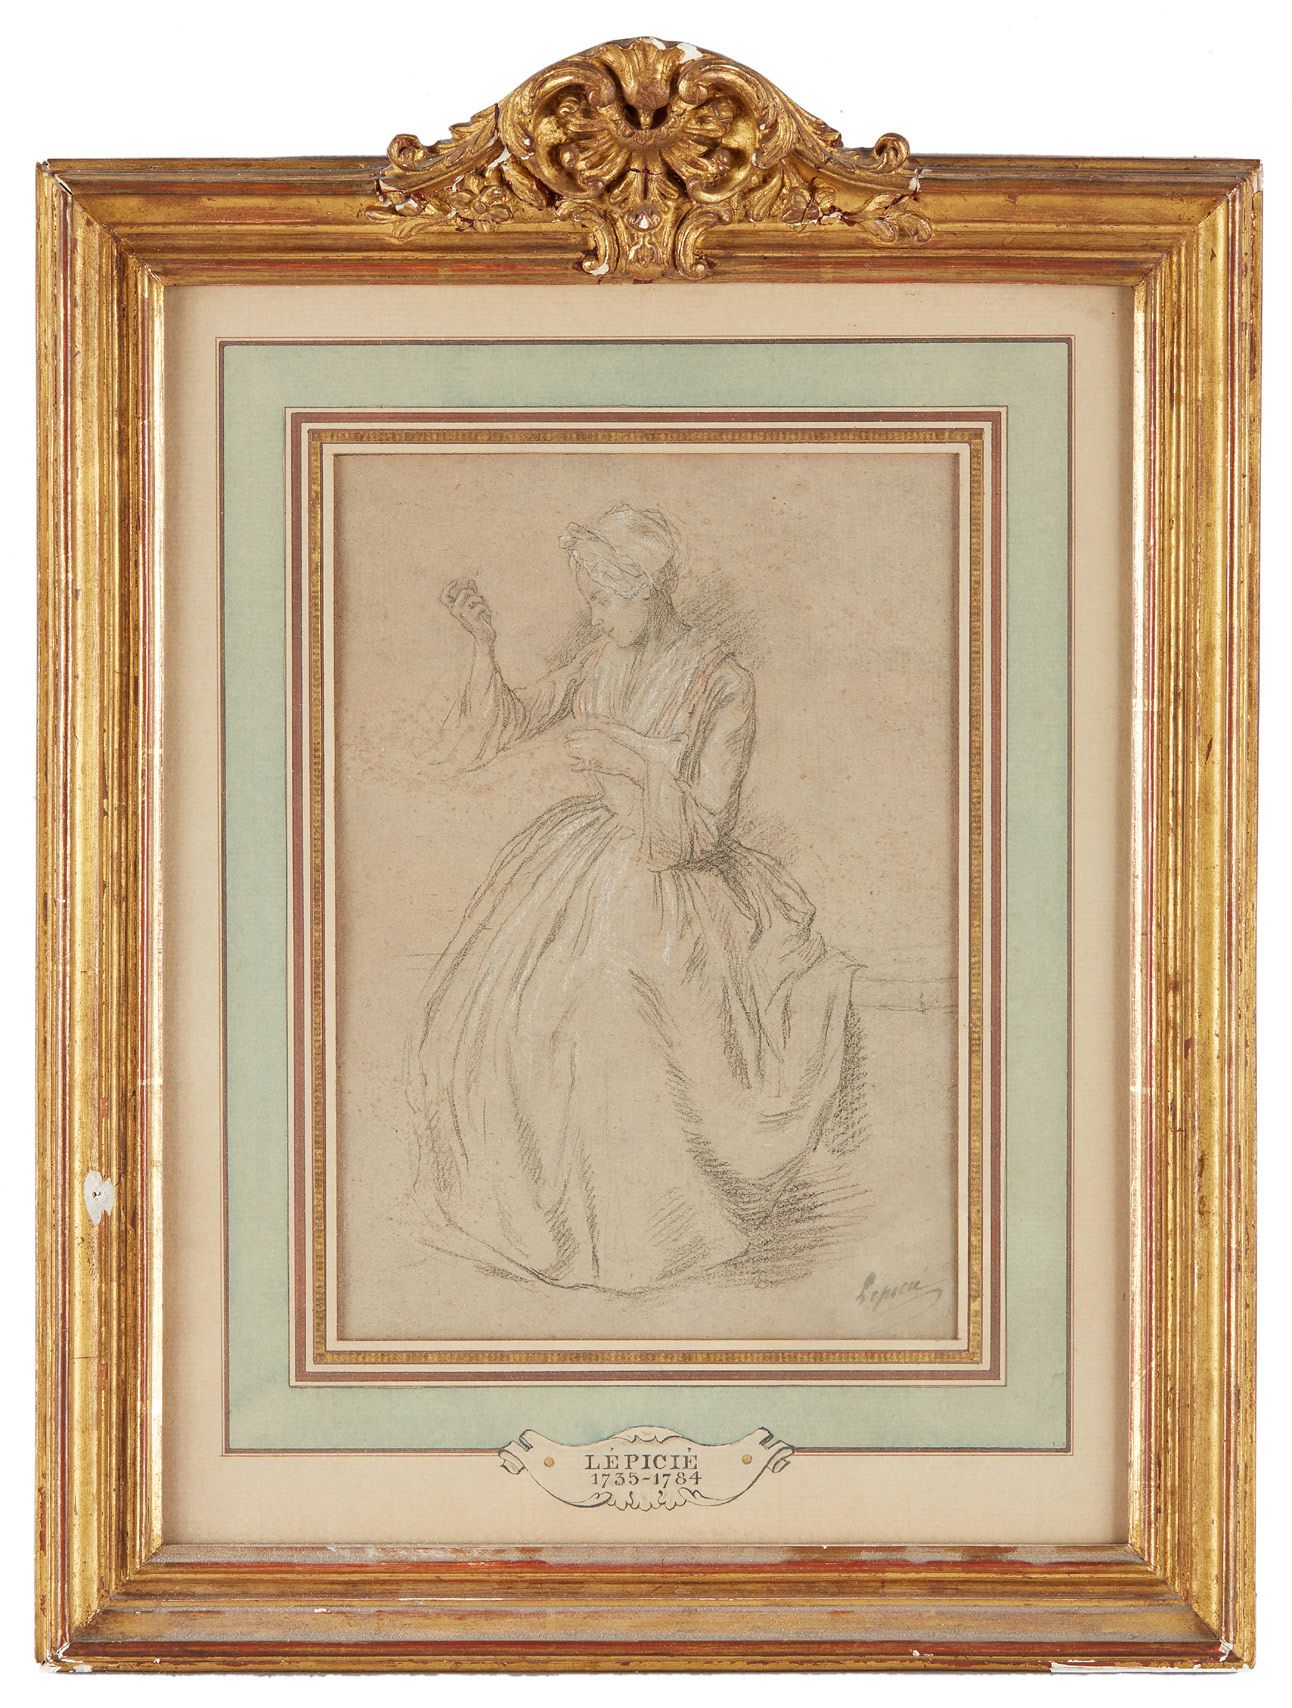 Nicolas Bernard LEPICIE (Paris 1735 - 1784) Etude de femme assise
Schwarzer Stei&hellip;